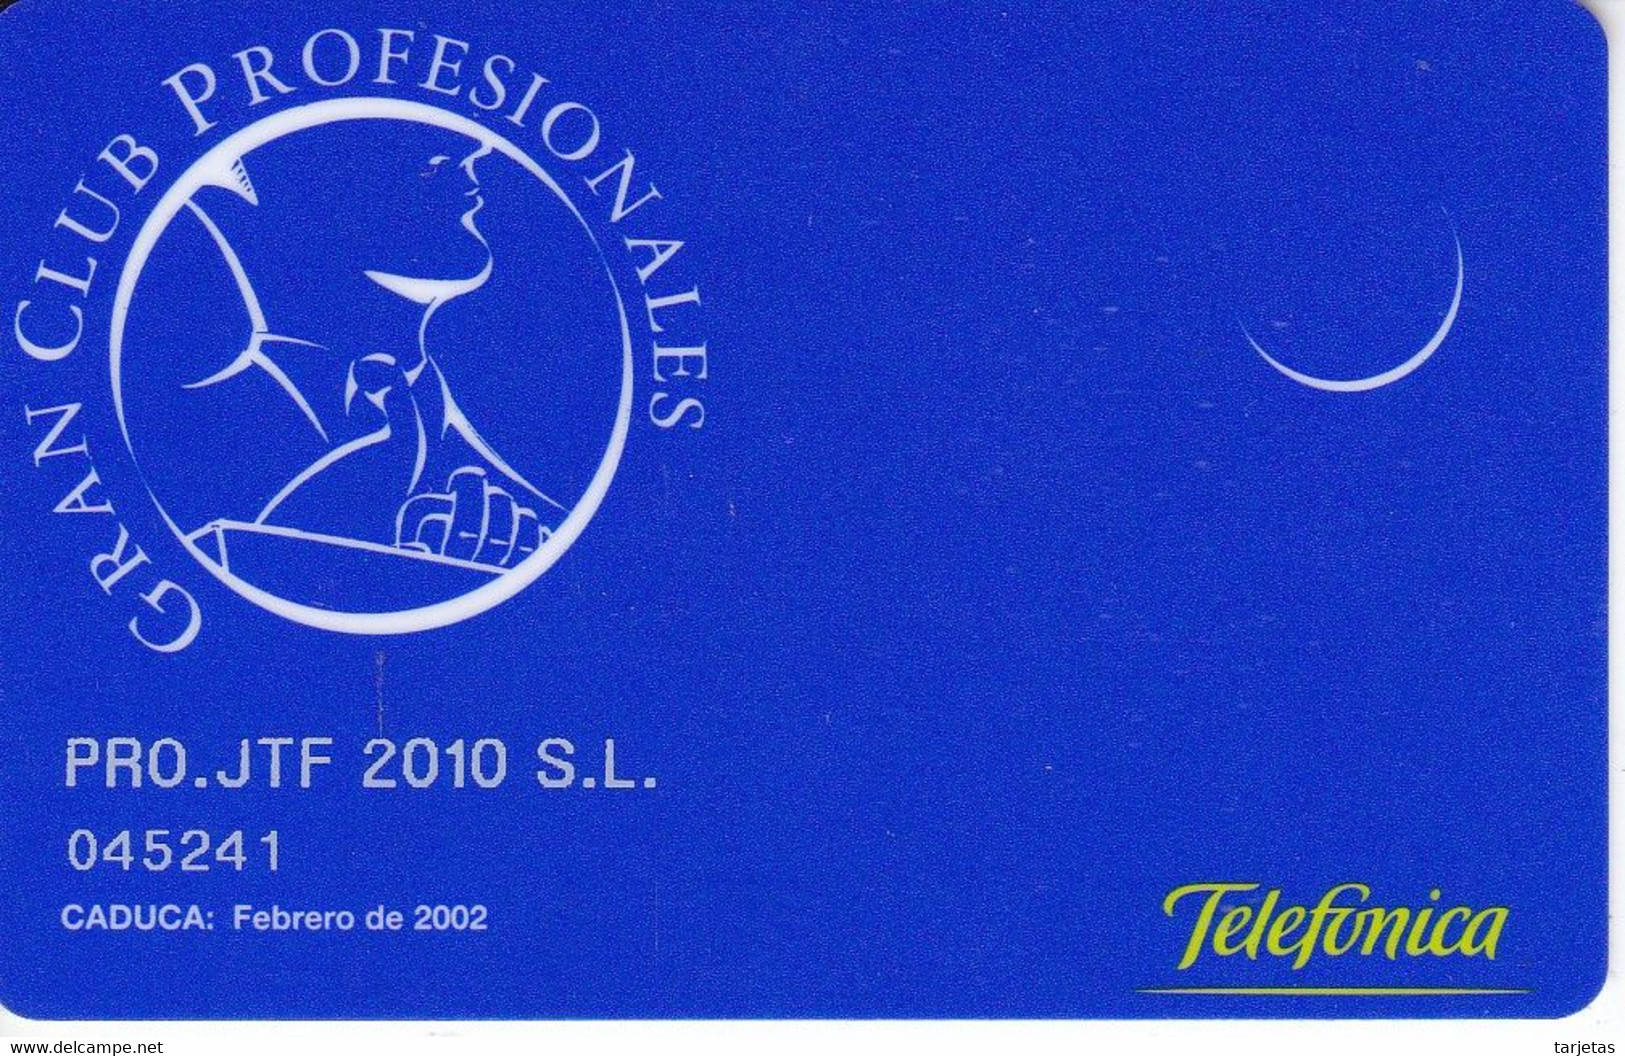 TARJETA GRAN CLUB PROFESIONALES DE TELEFONICA (RARA) - Dienstkarten